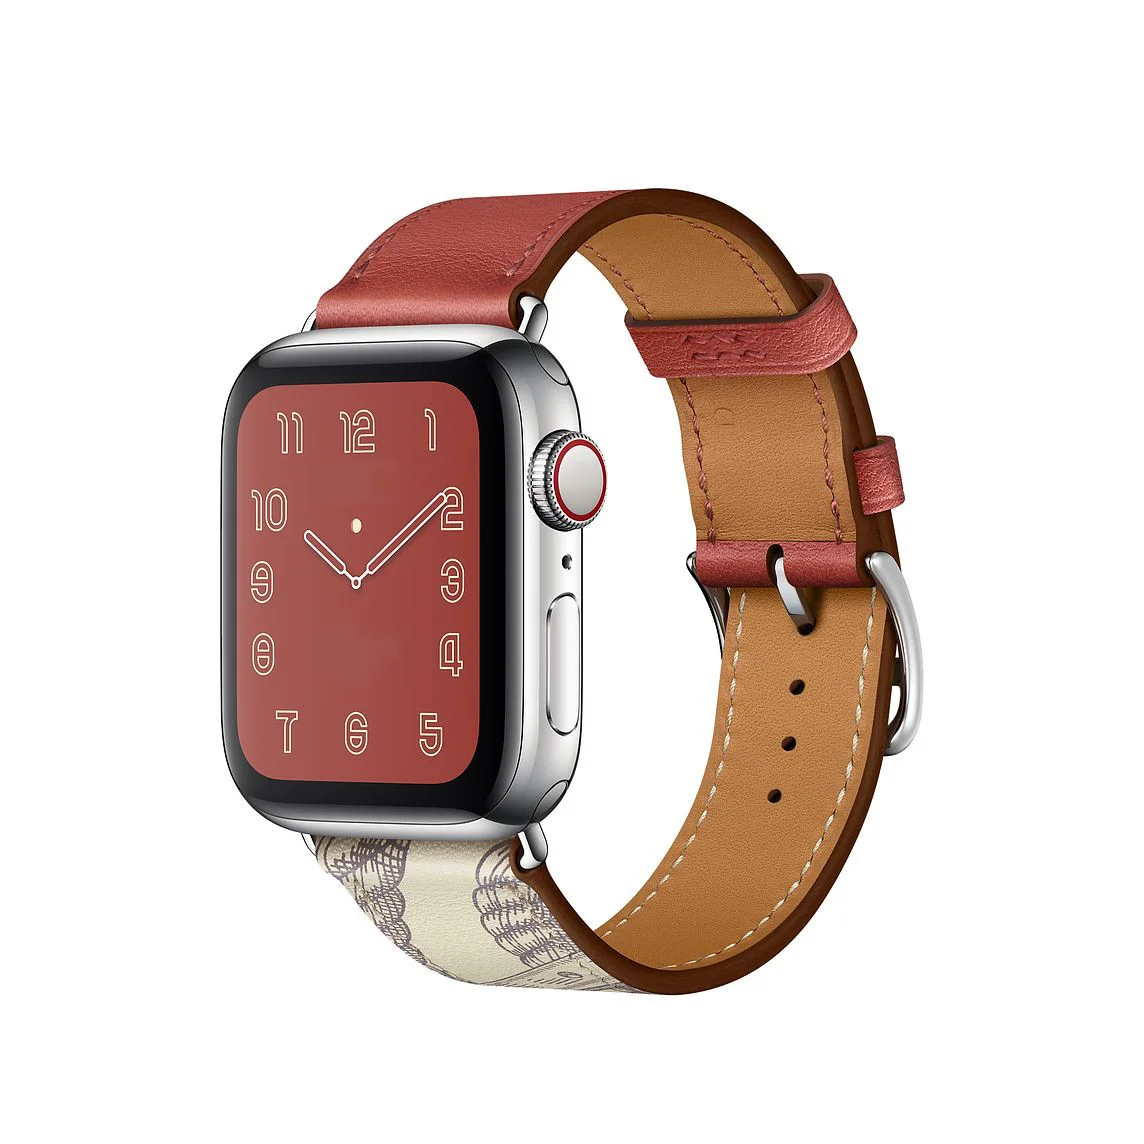 Řemínek iMore Single Tour Apple Watch Series 3/2/1 (38mm) - Cihla/Beton